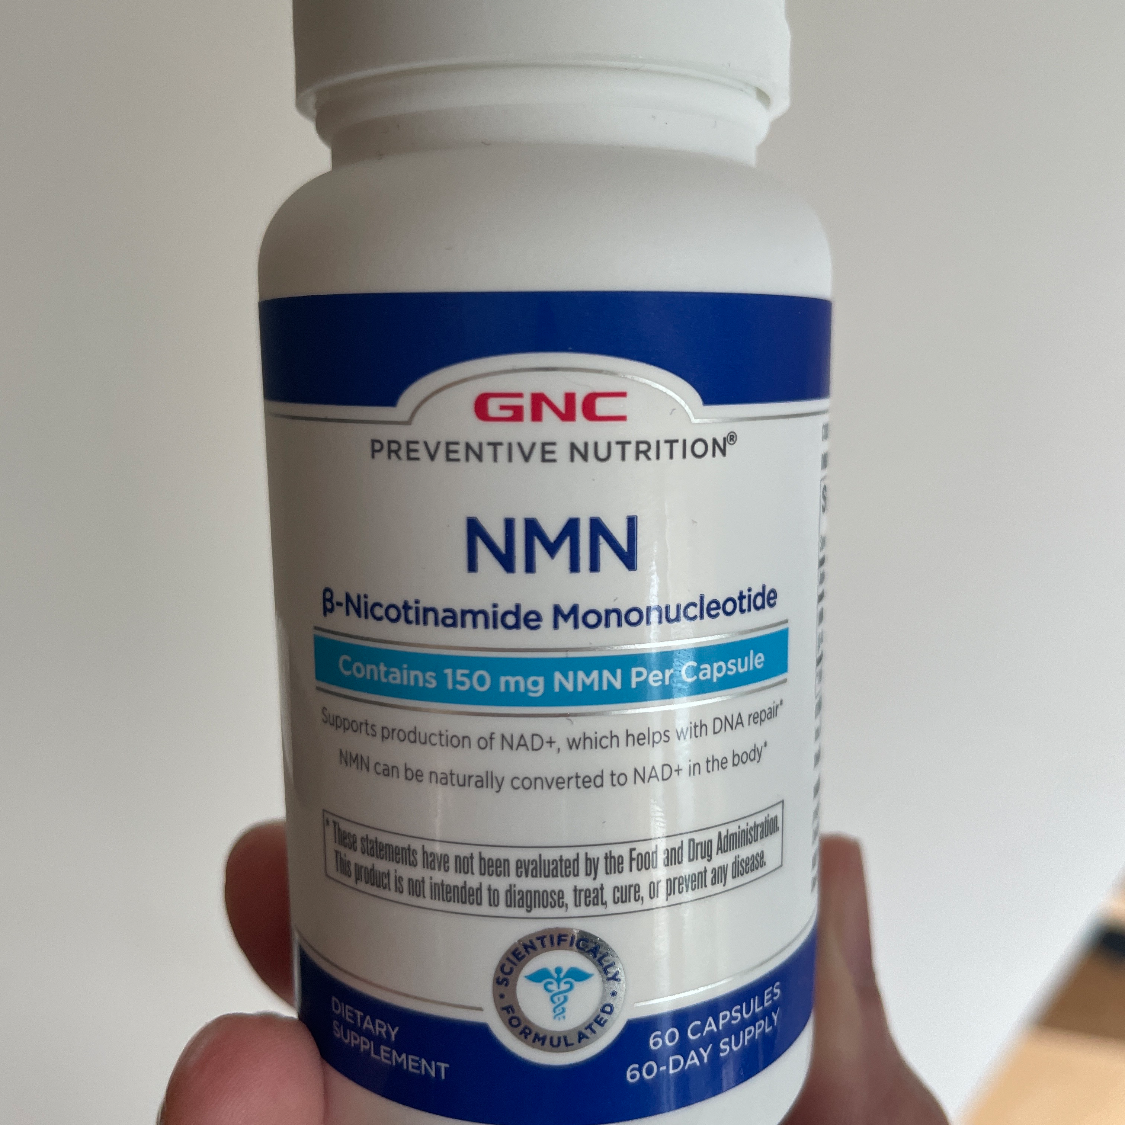 Gnc Preventive Nutrition Nmn Buyandship Hong Kong 7845